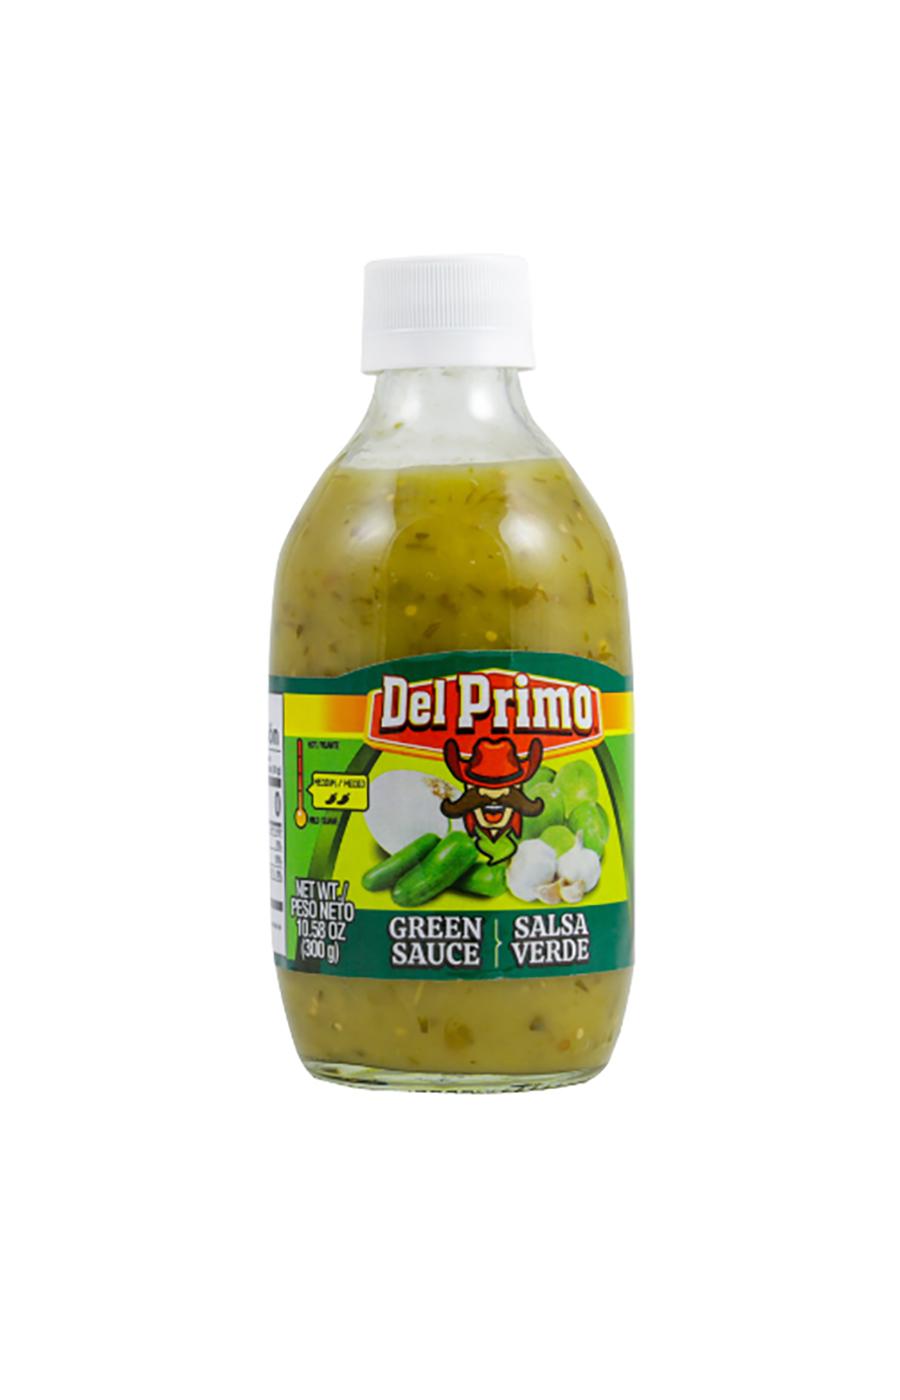 Del Primo Salsa Verde Green Sauce; image 1 of 3